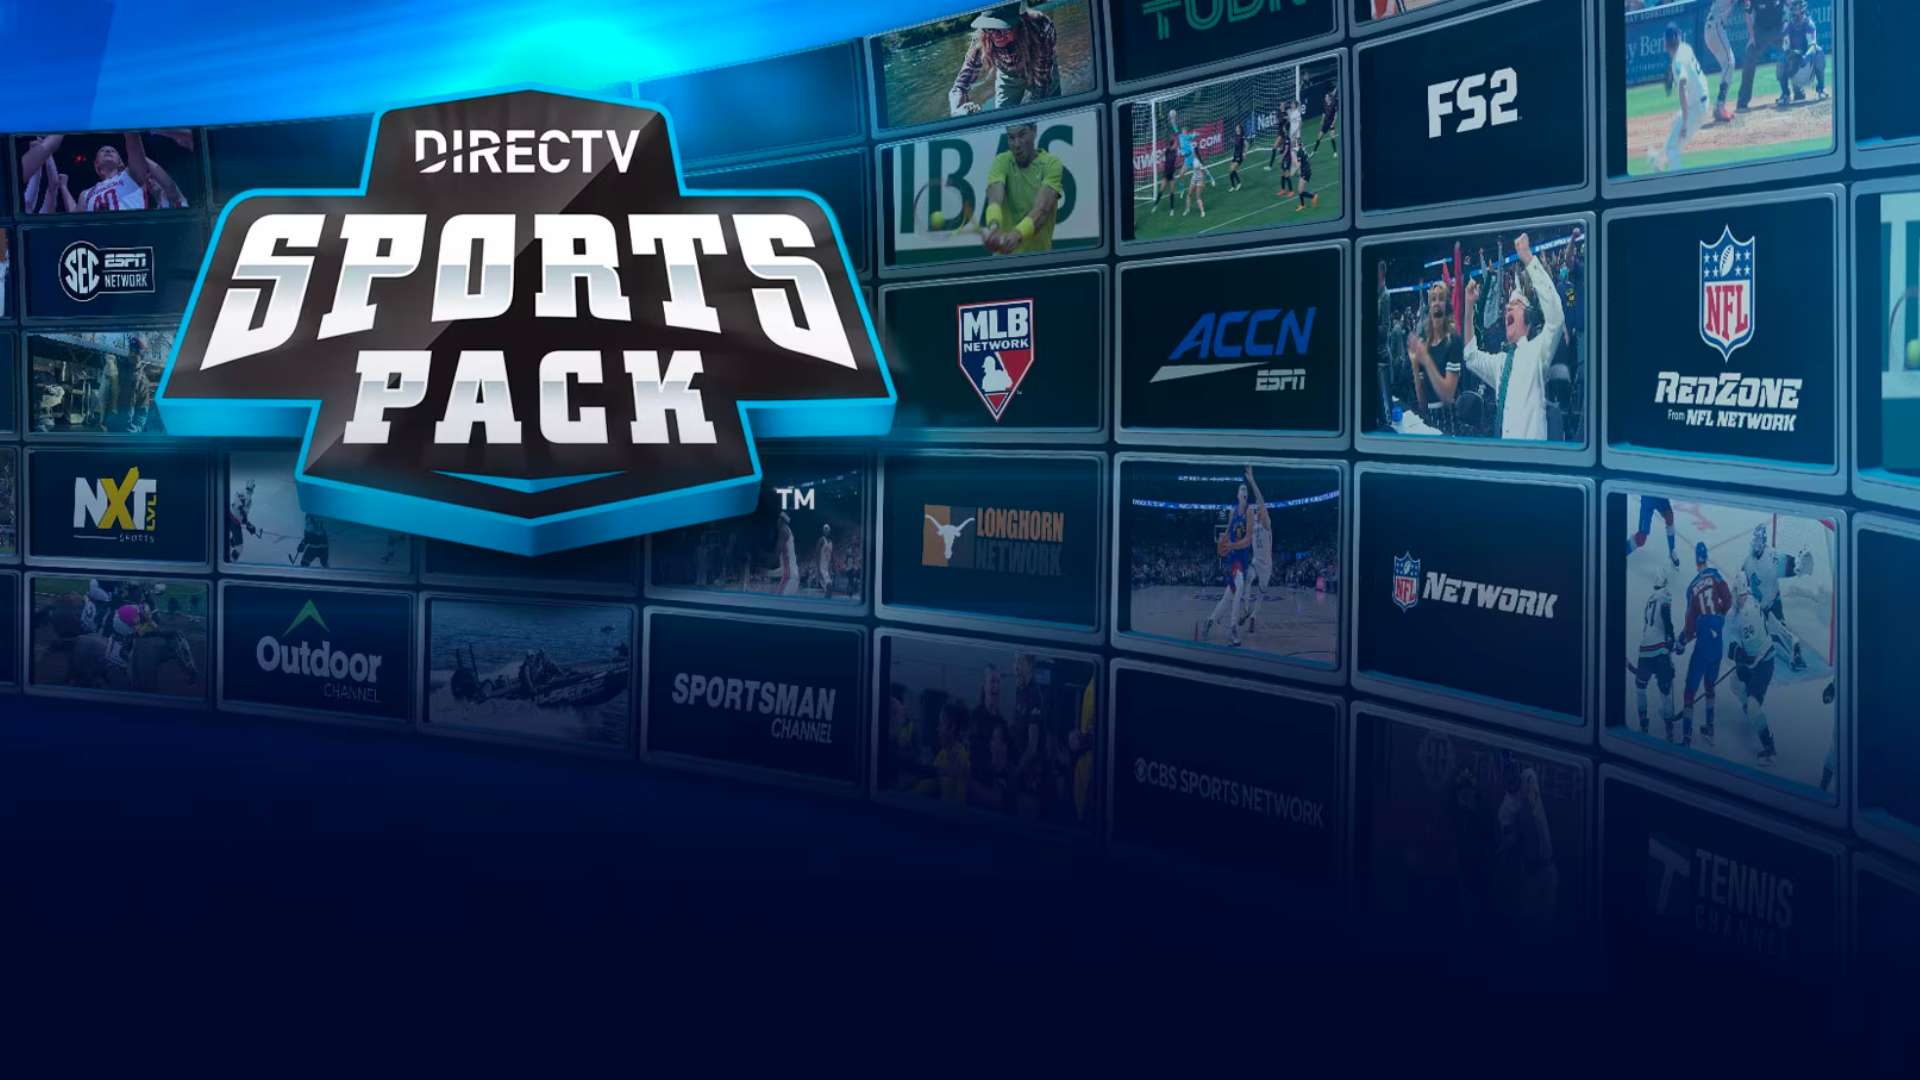 DirecTV Sports pack